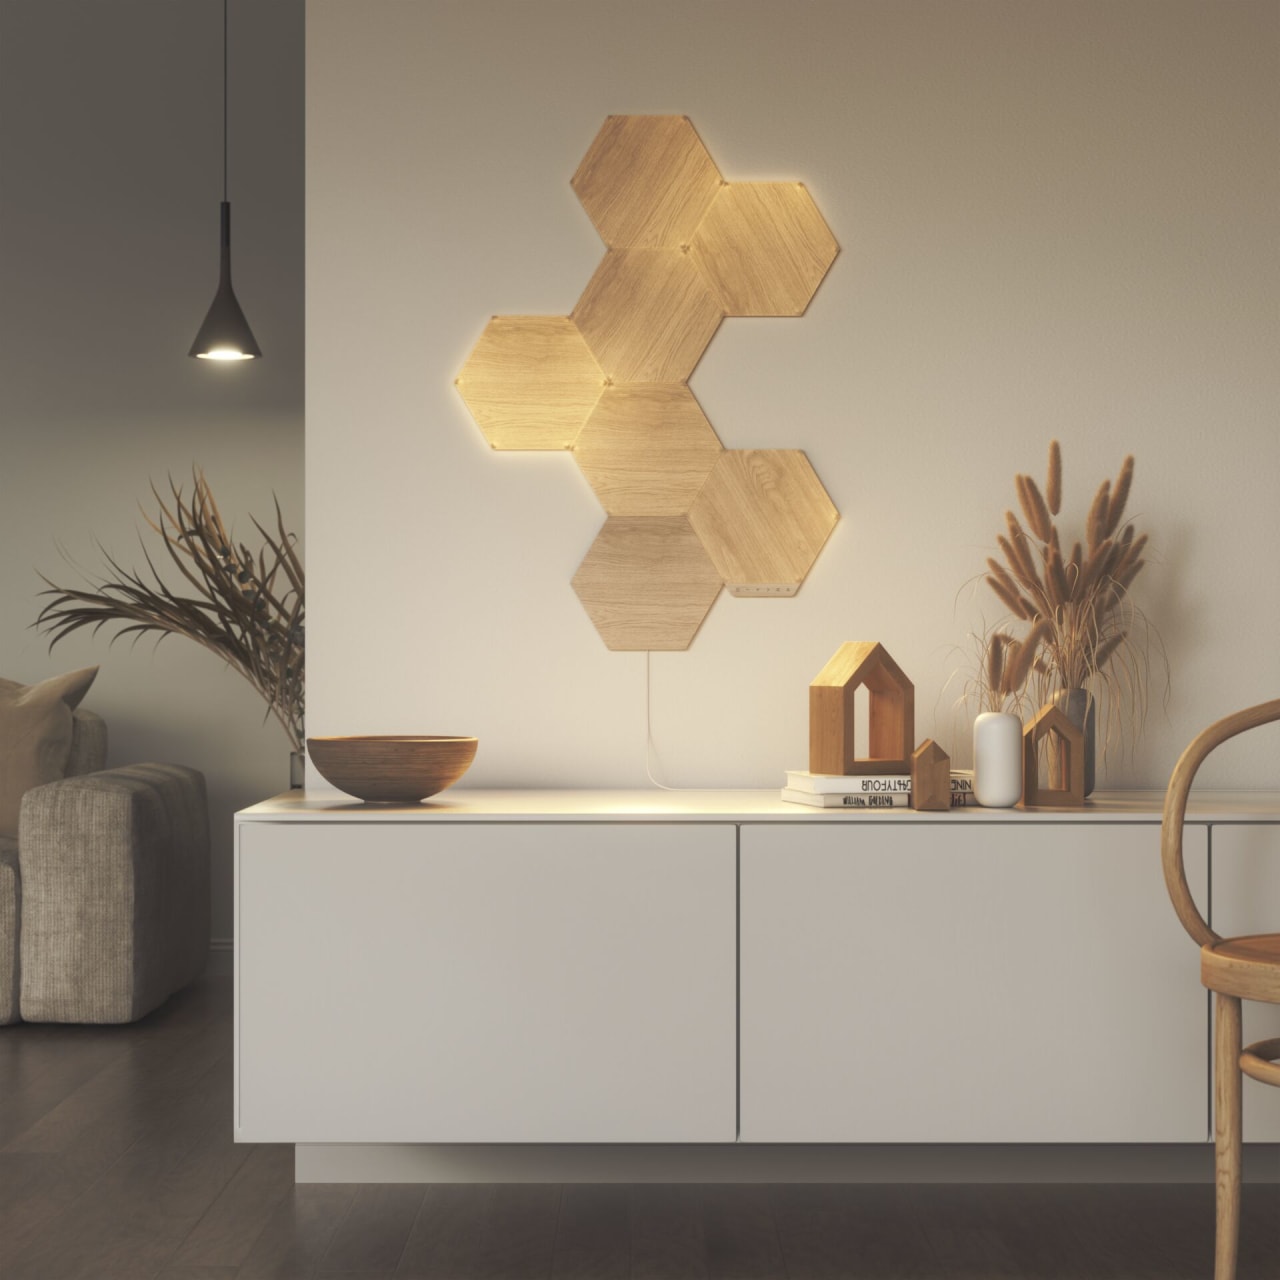 Holz Nanoleaf Elements Wood Look Hexagons Starter Kit 7x.3